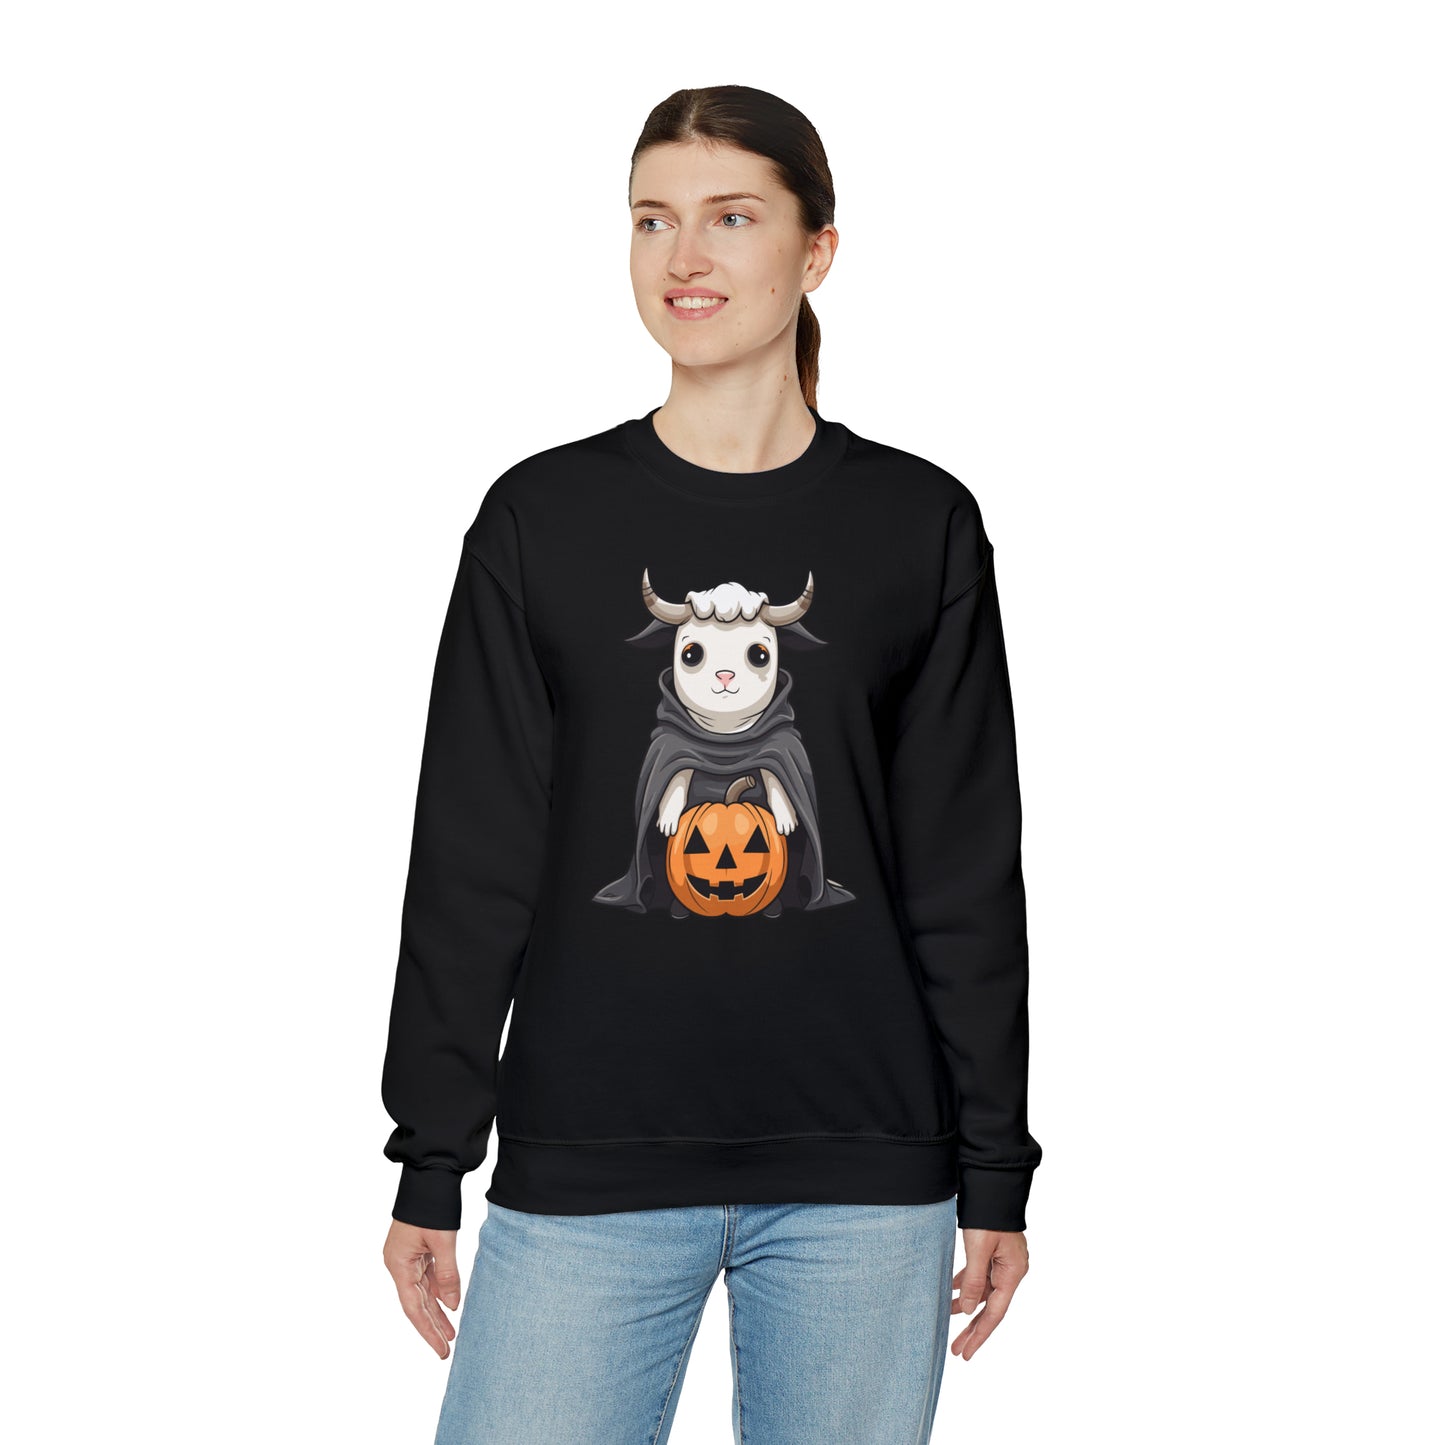 Ghost Cow Sweatshirt, Pumpkin Halloween Graphic Crewneck Fleece Cotton Sweater Jumper Pullover Men Women Adult Aesthetic Designer Top Starcove Fashion